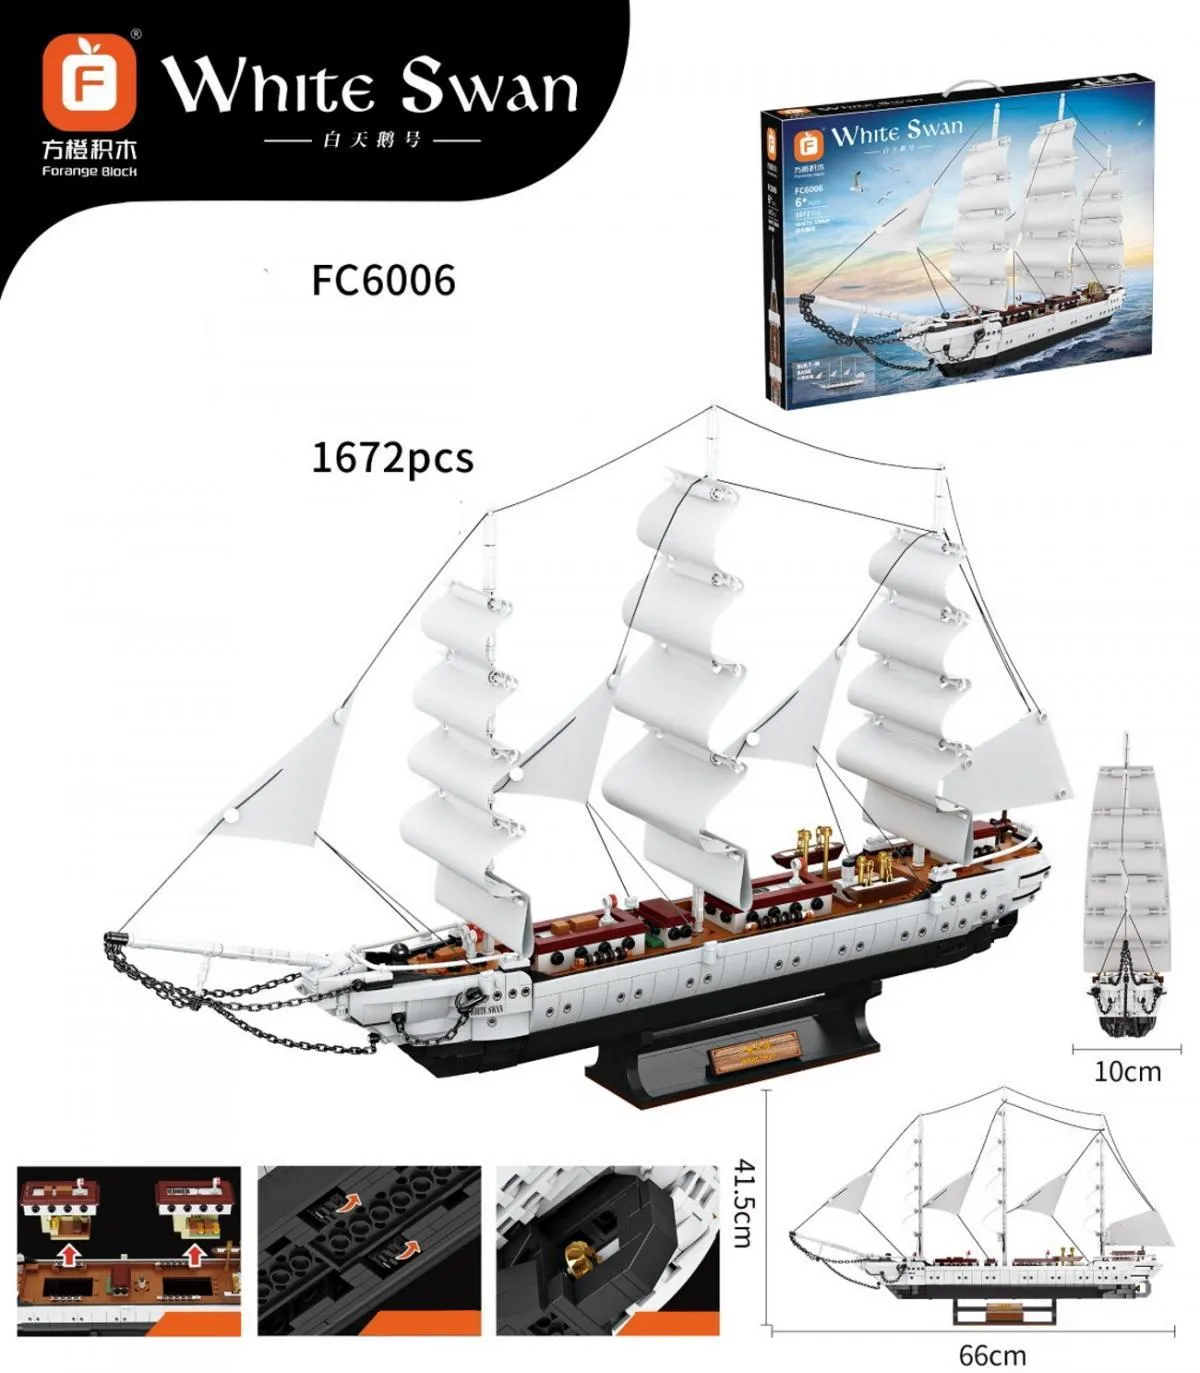 Sailing ship White Swan Gallery